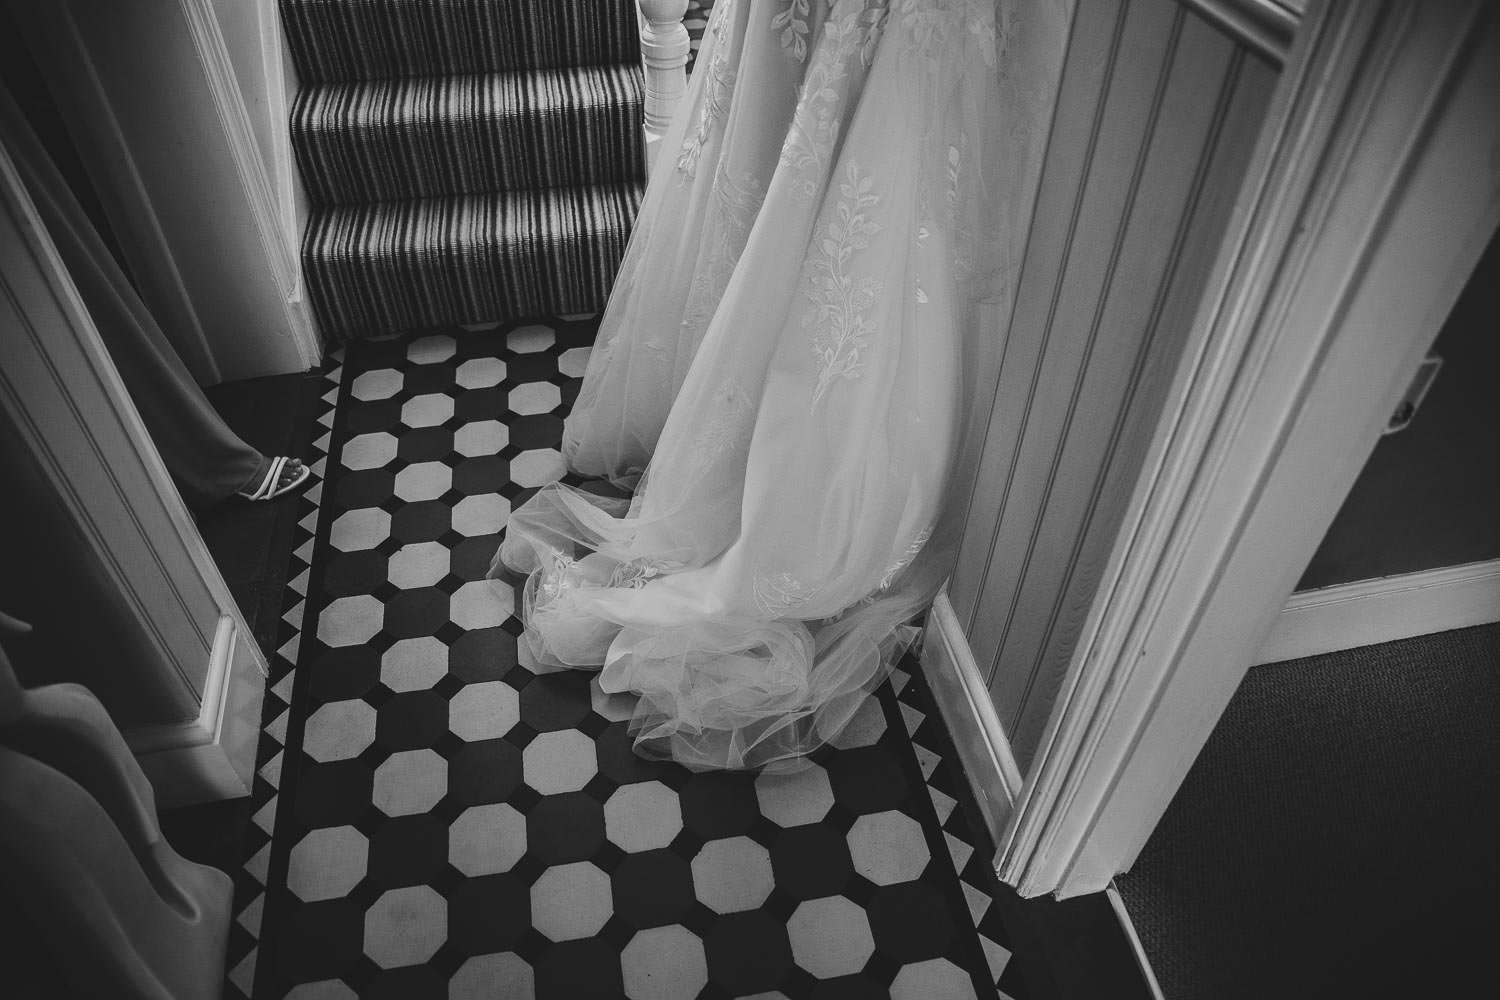 Wedding dress on art deco tiled floor at brides home